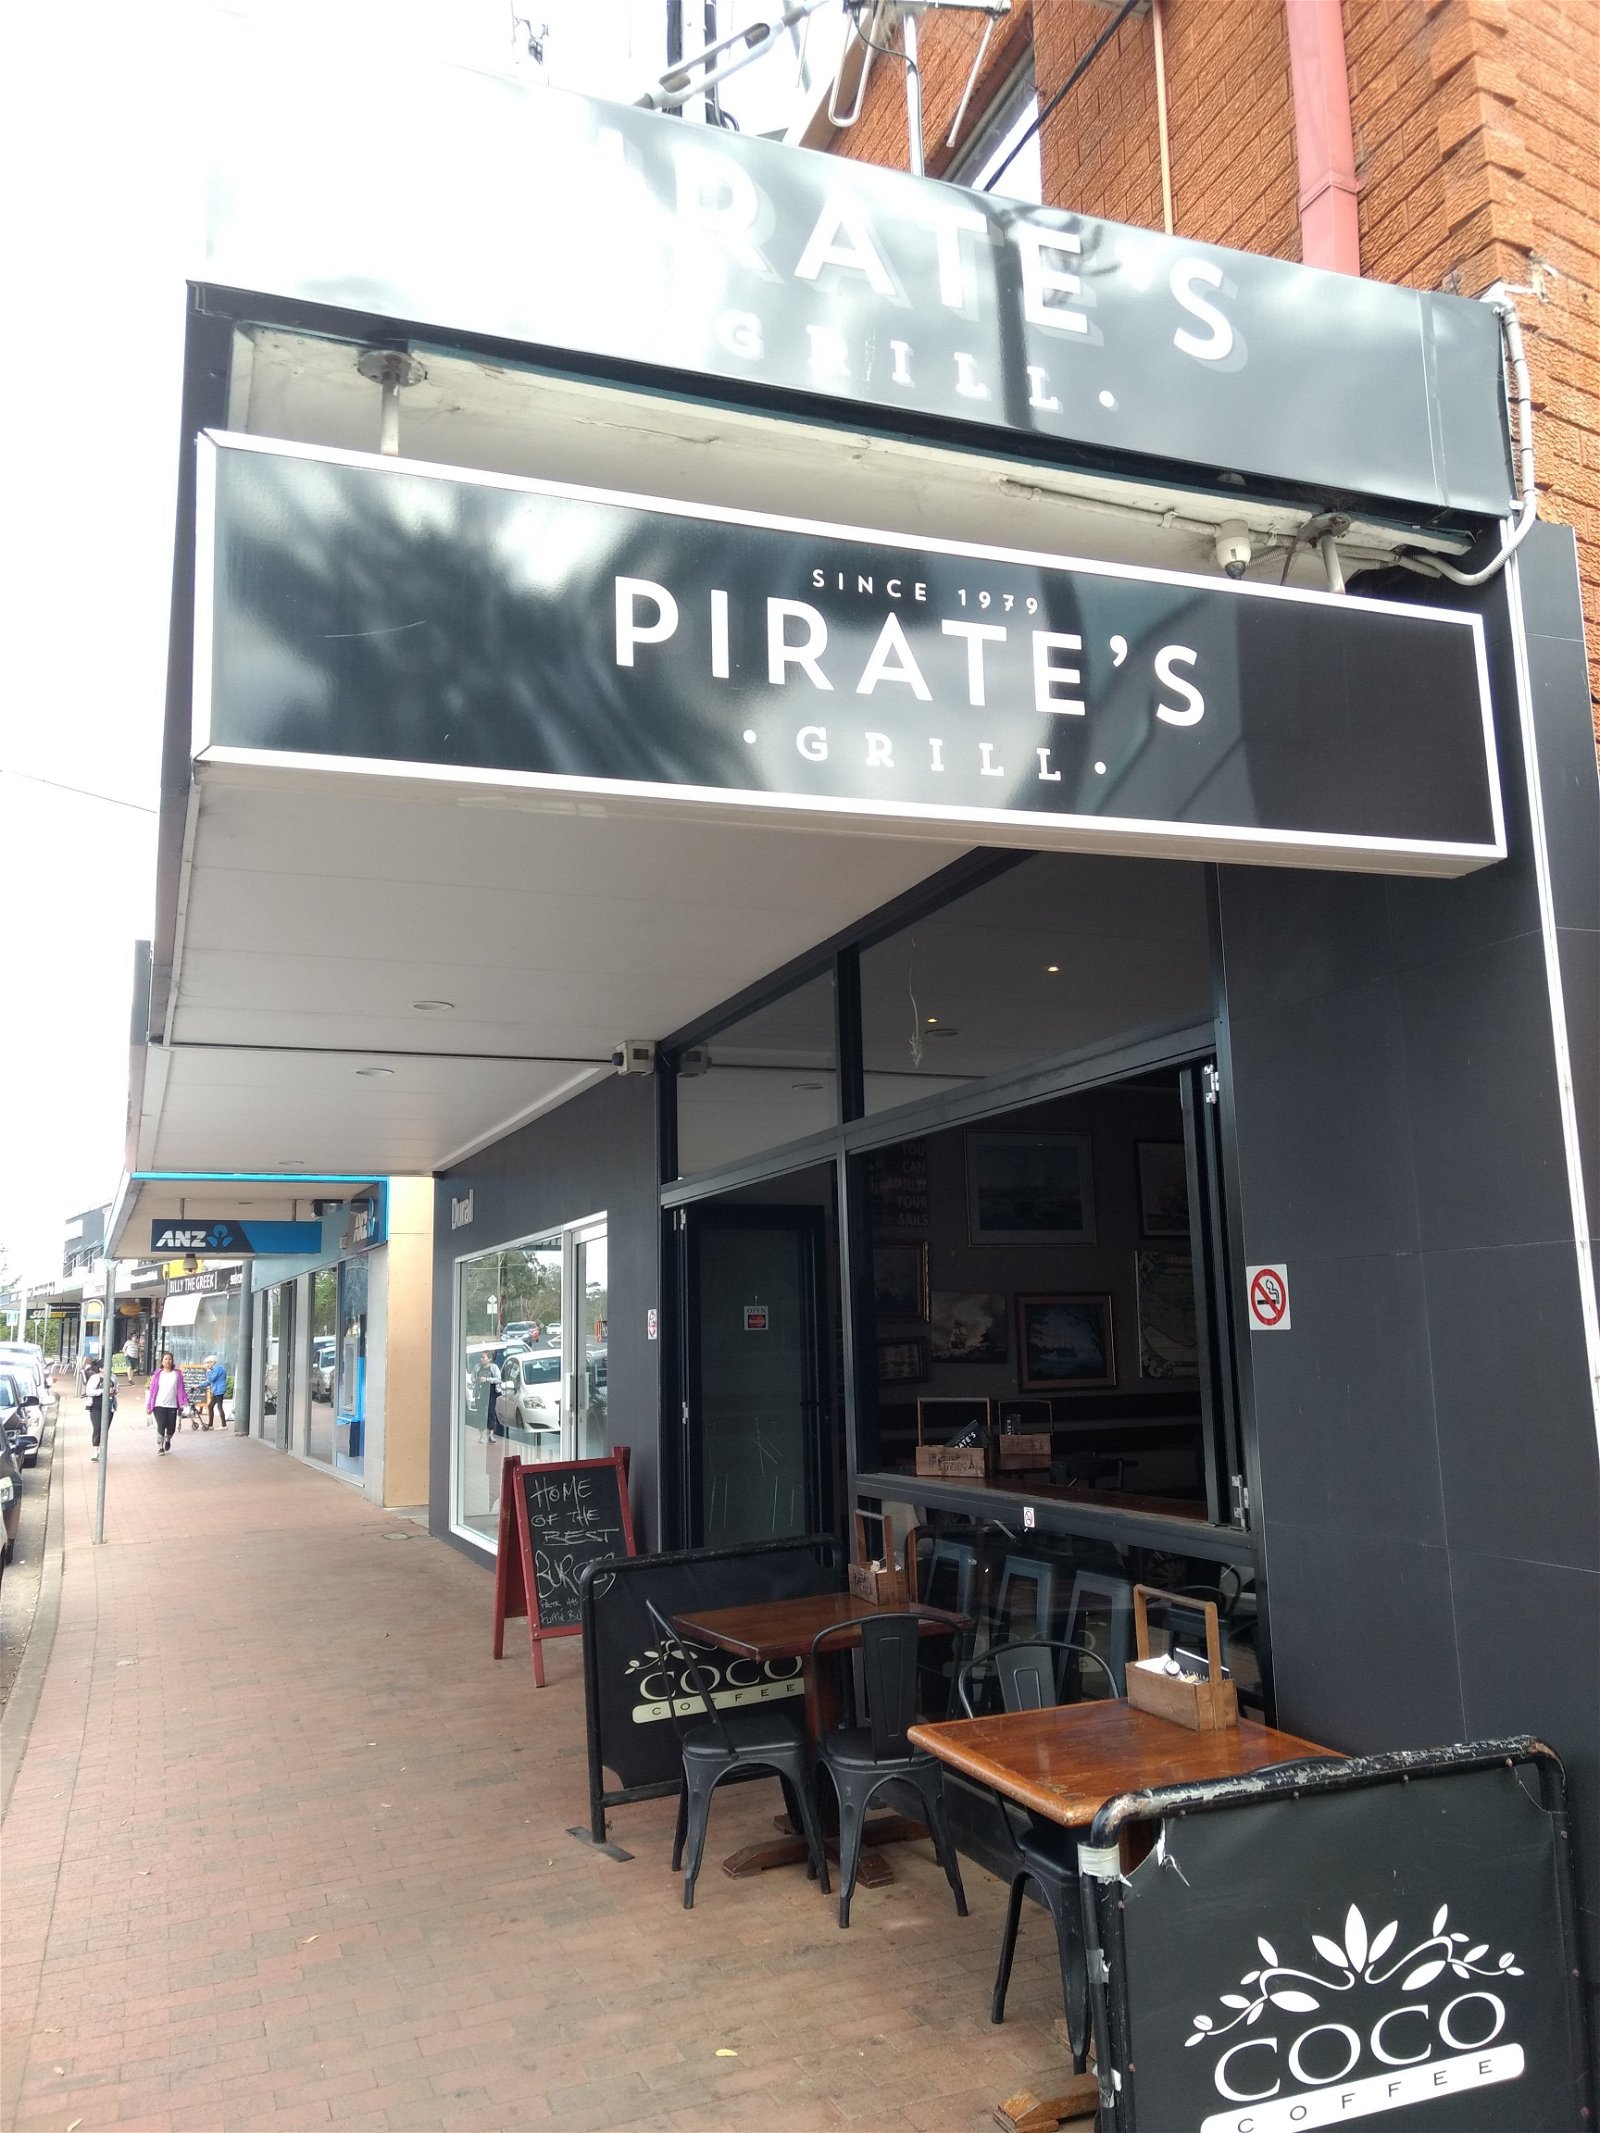 Pirate's Grill - South Australia Travel